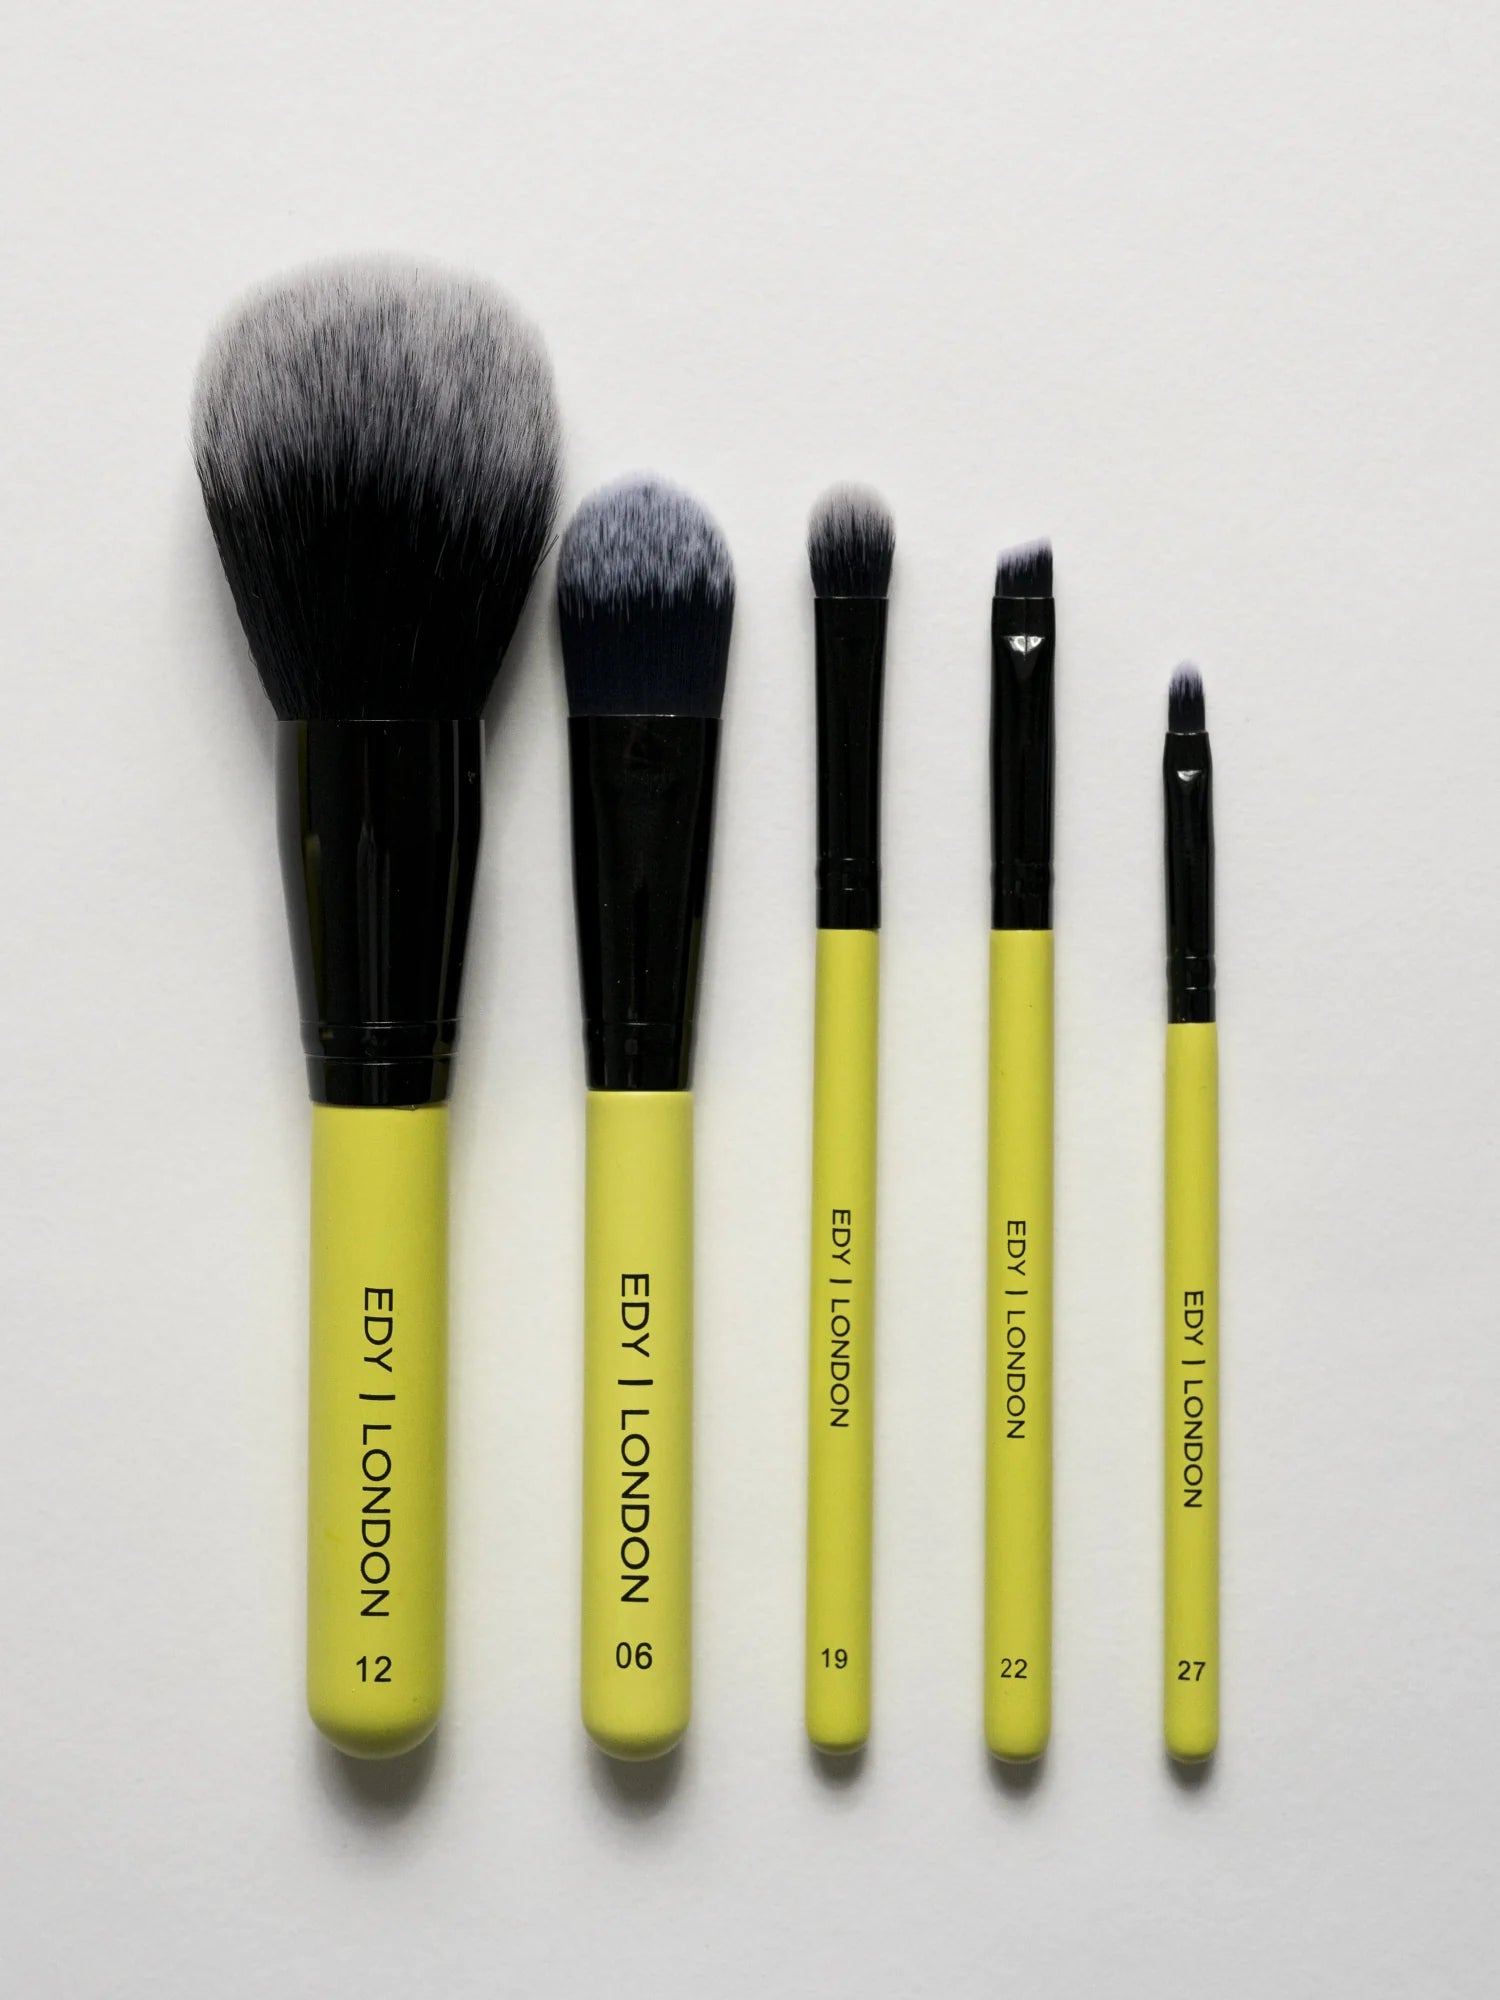 Smart Compact Brush Set 504 Make-up Brush EDY LONDON Lemon   - EDY LONDON PRODUCTS UK - The Best Makeup Brushes - shop.edy.london